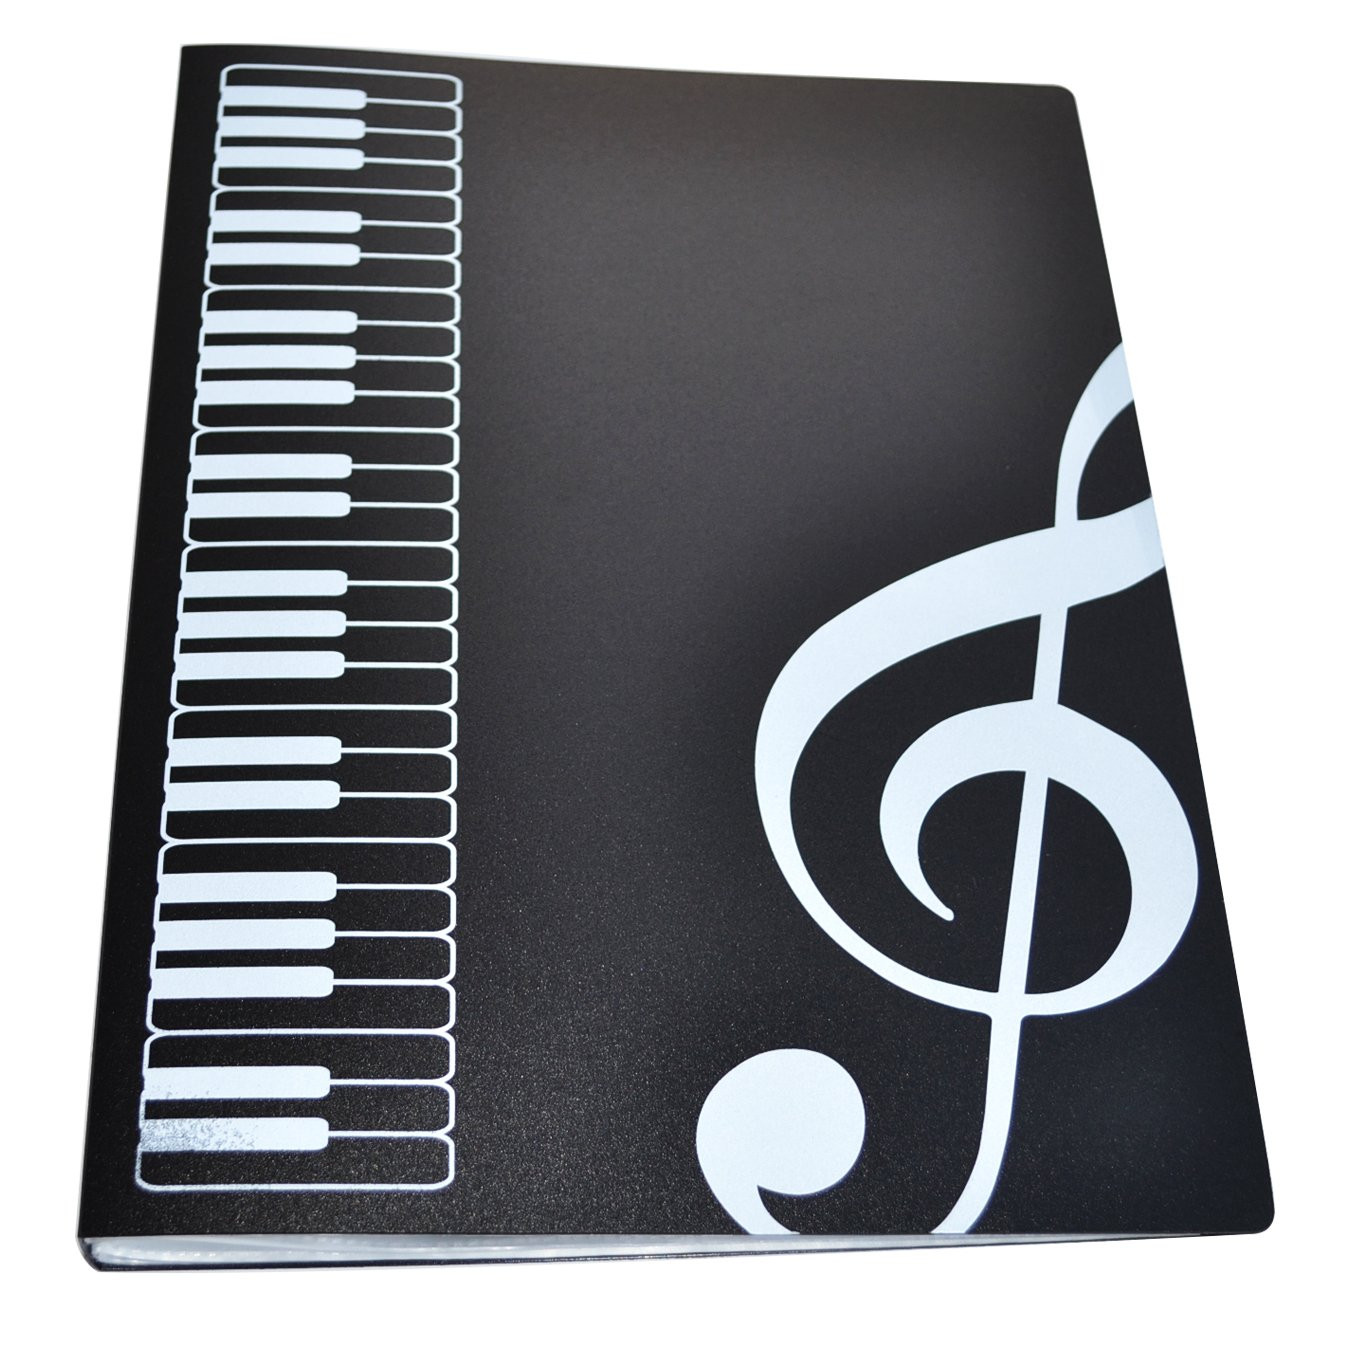 Music Folder Organizer
 Best Rated in Sheet Music Folders & Helpful Customer